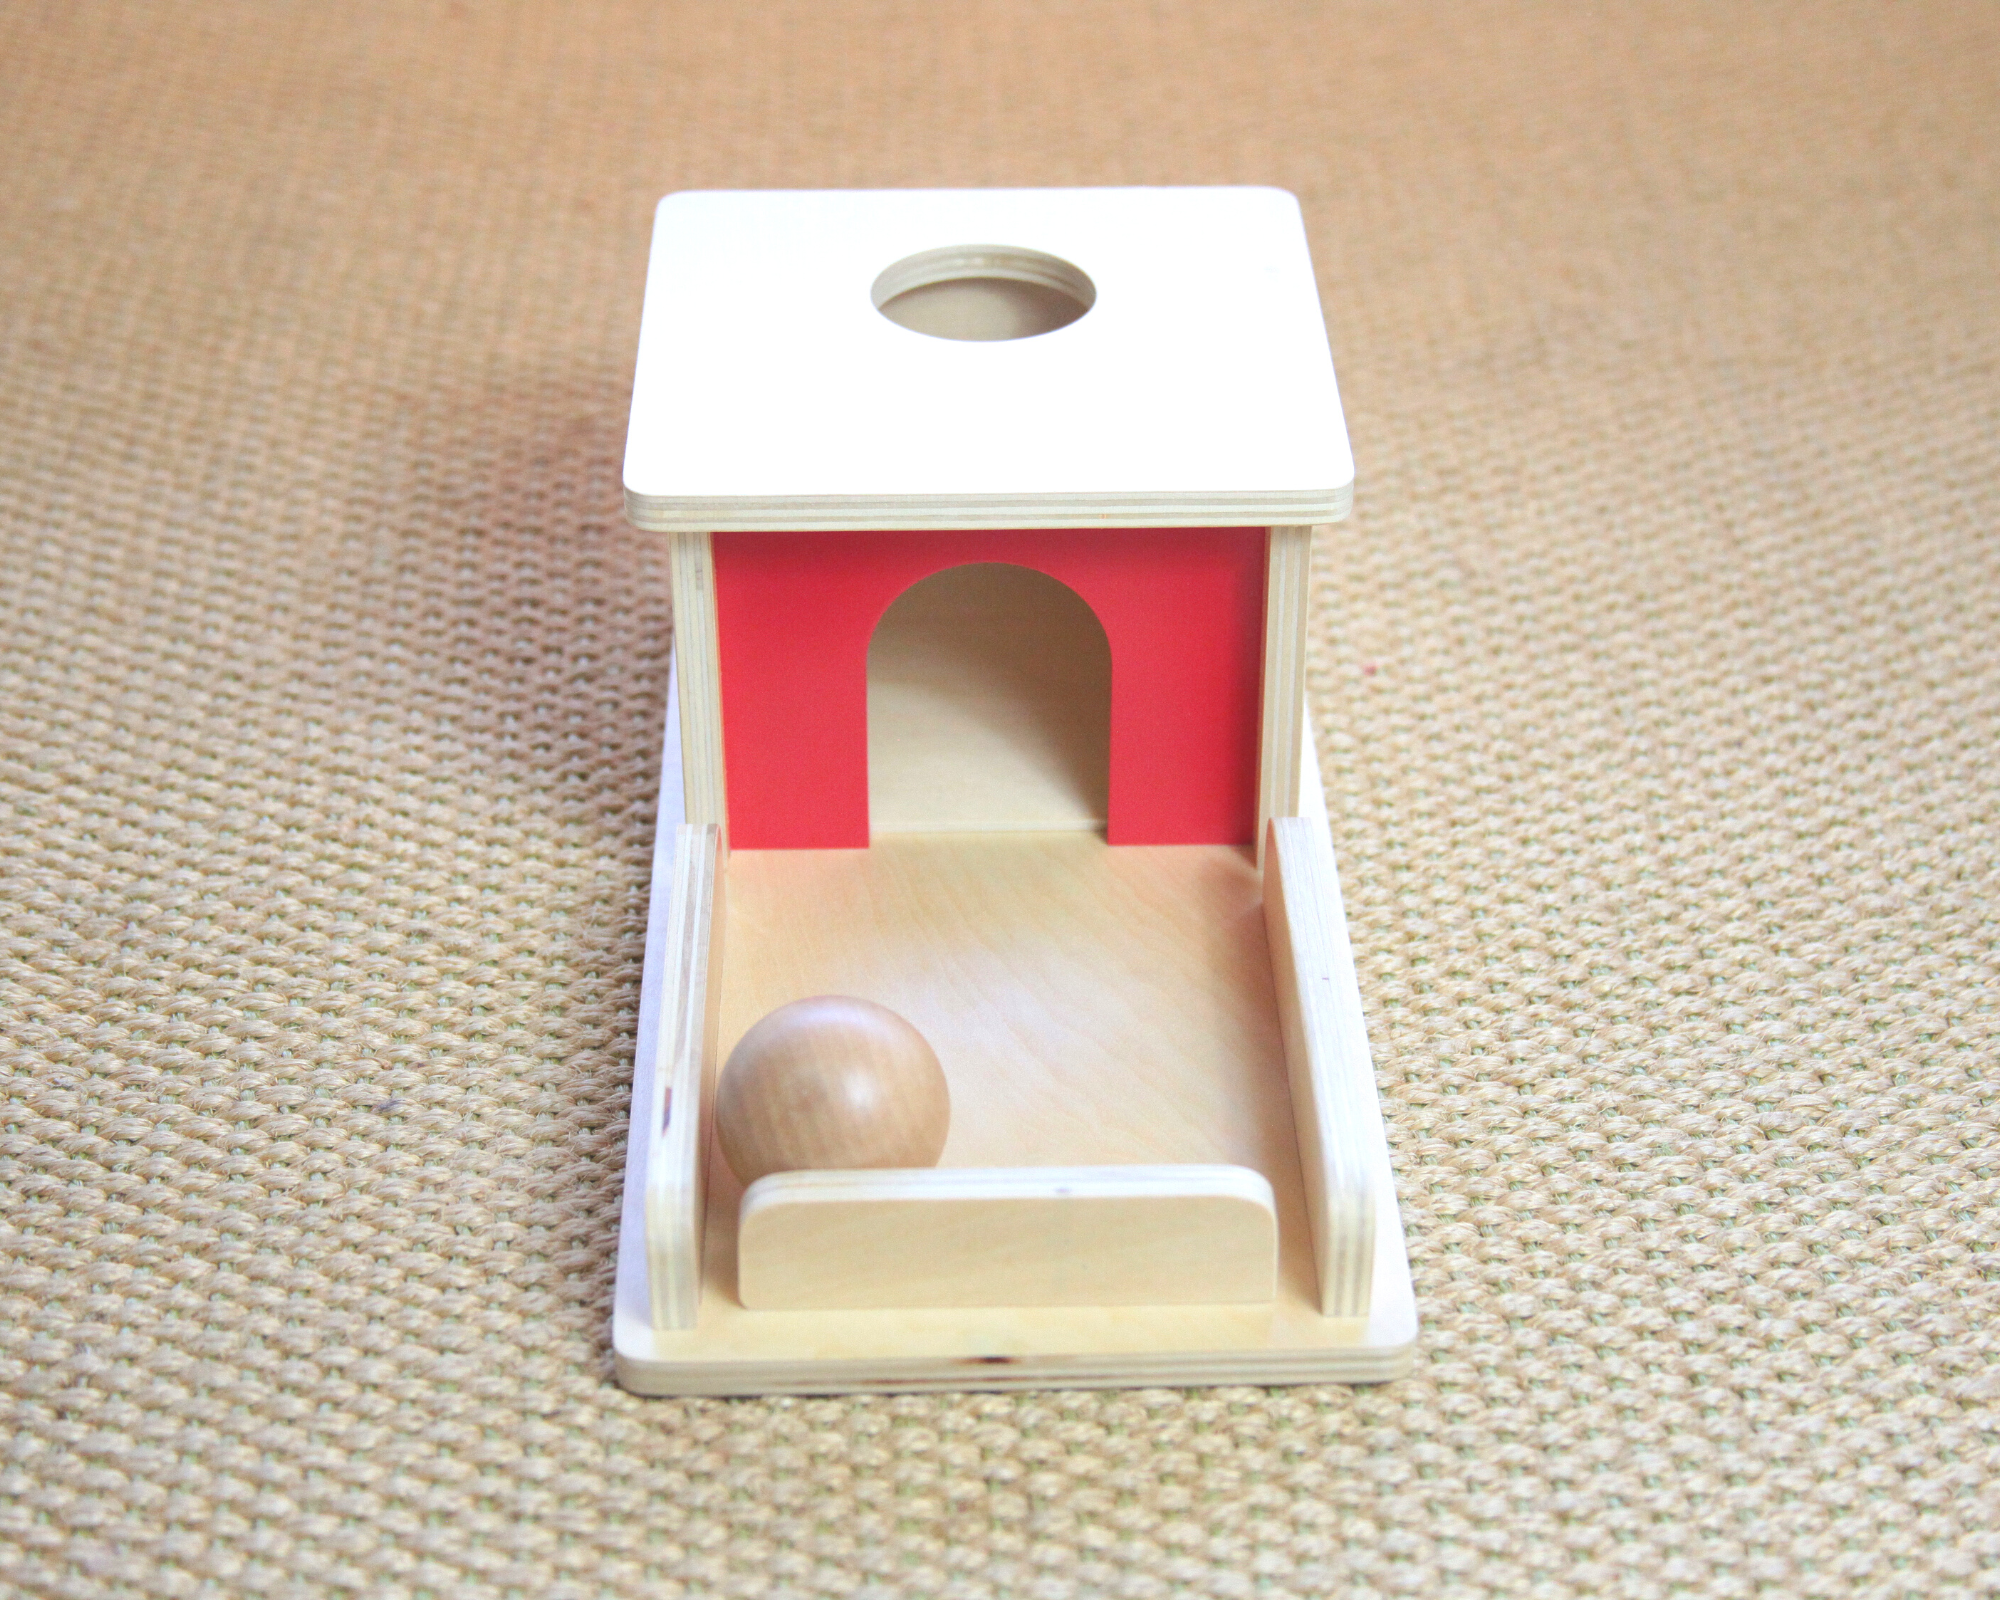 Objektpermanenz Box Permanent Ziel Box Kinder Lernspielzeug Pädagogik Spielzeug für Kinder